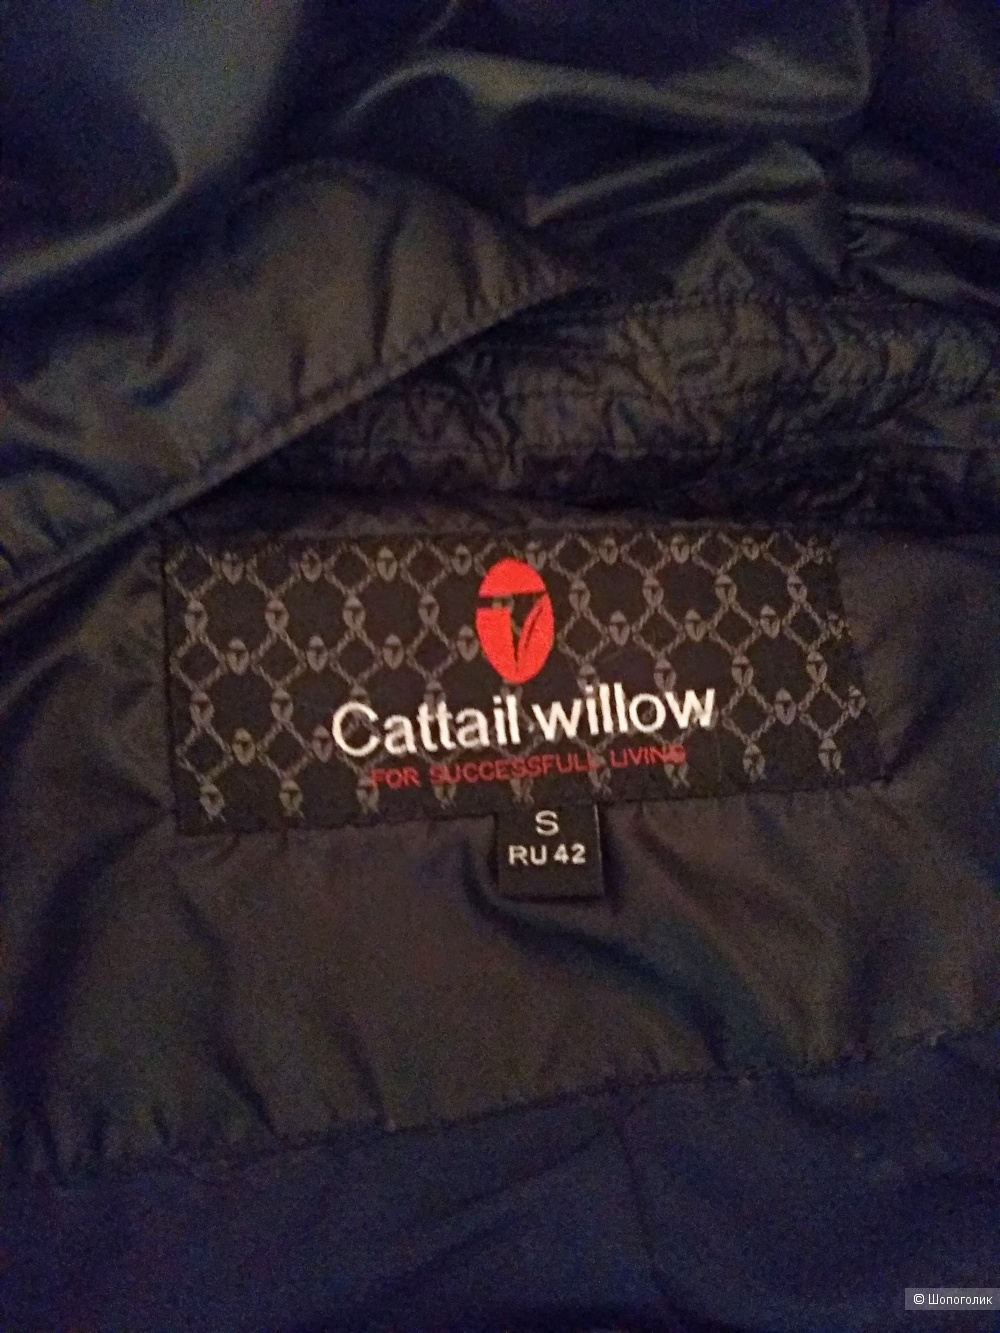 Пальто пуховик Gattail Willow, размер S на 42,44